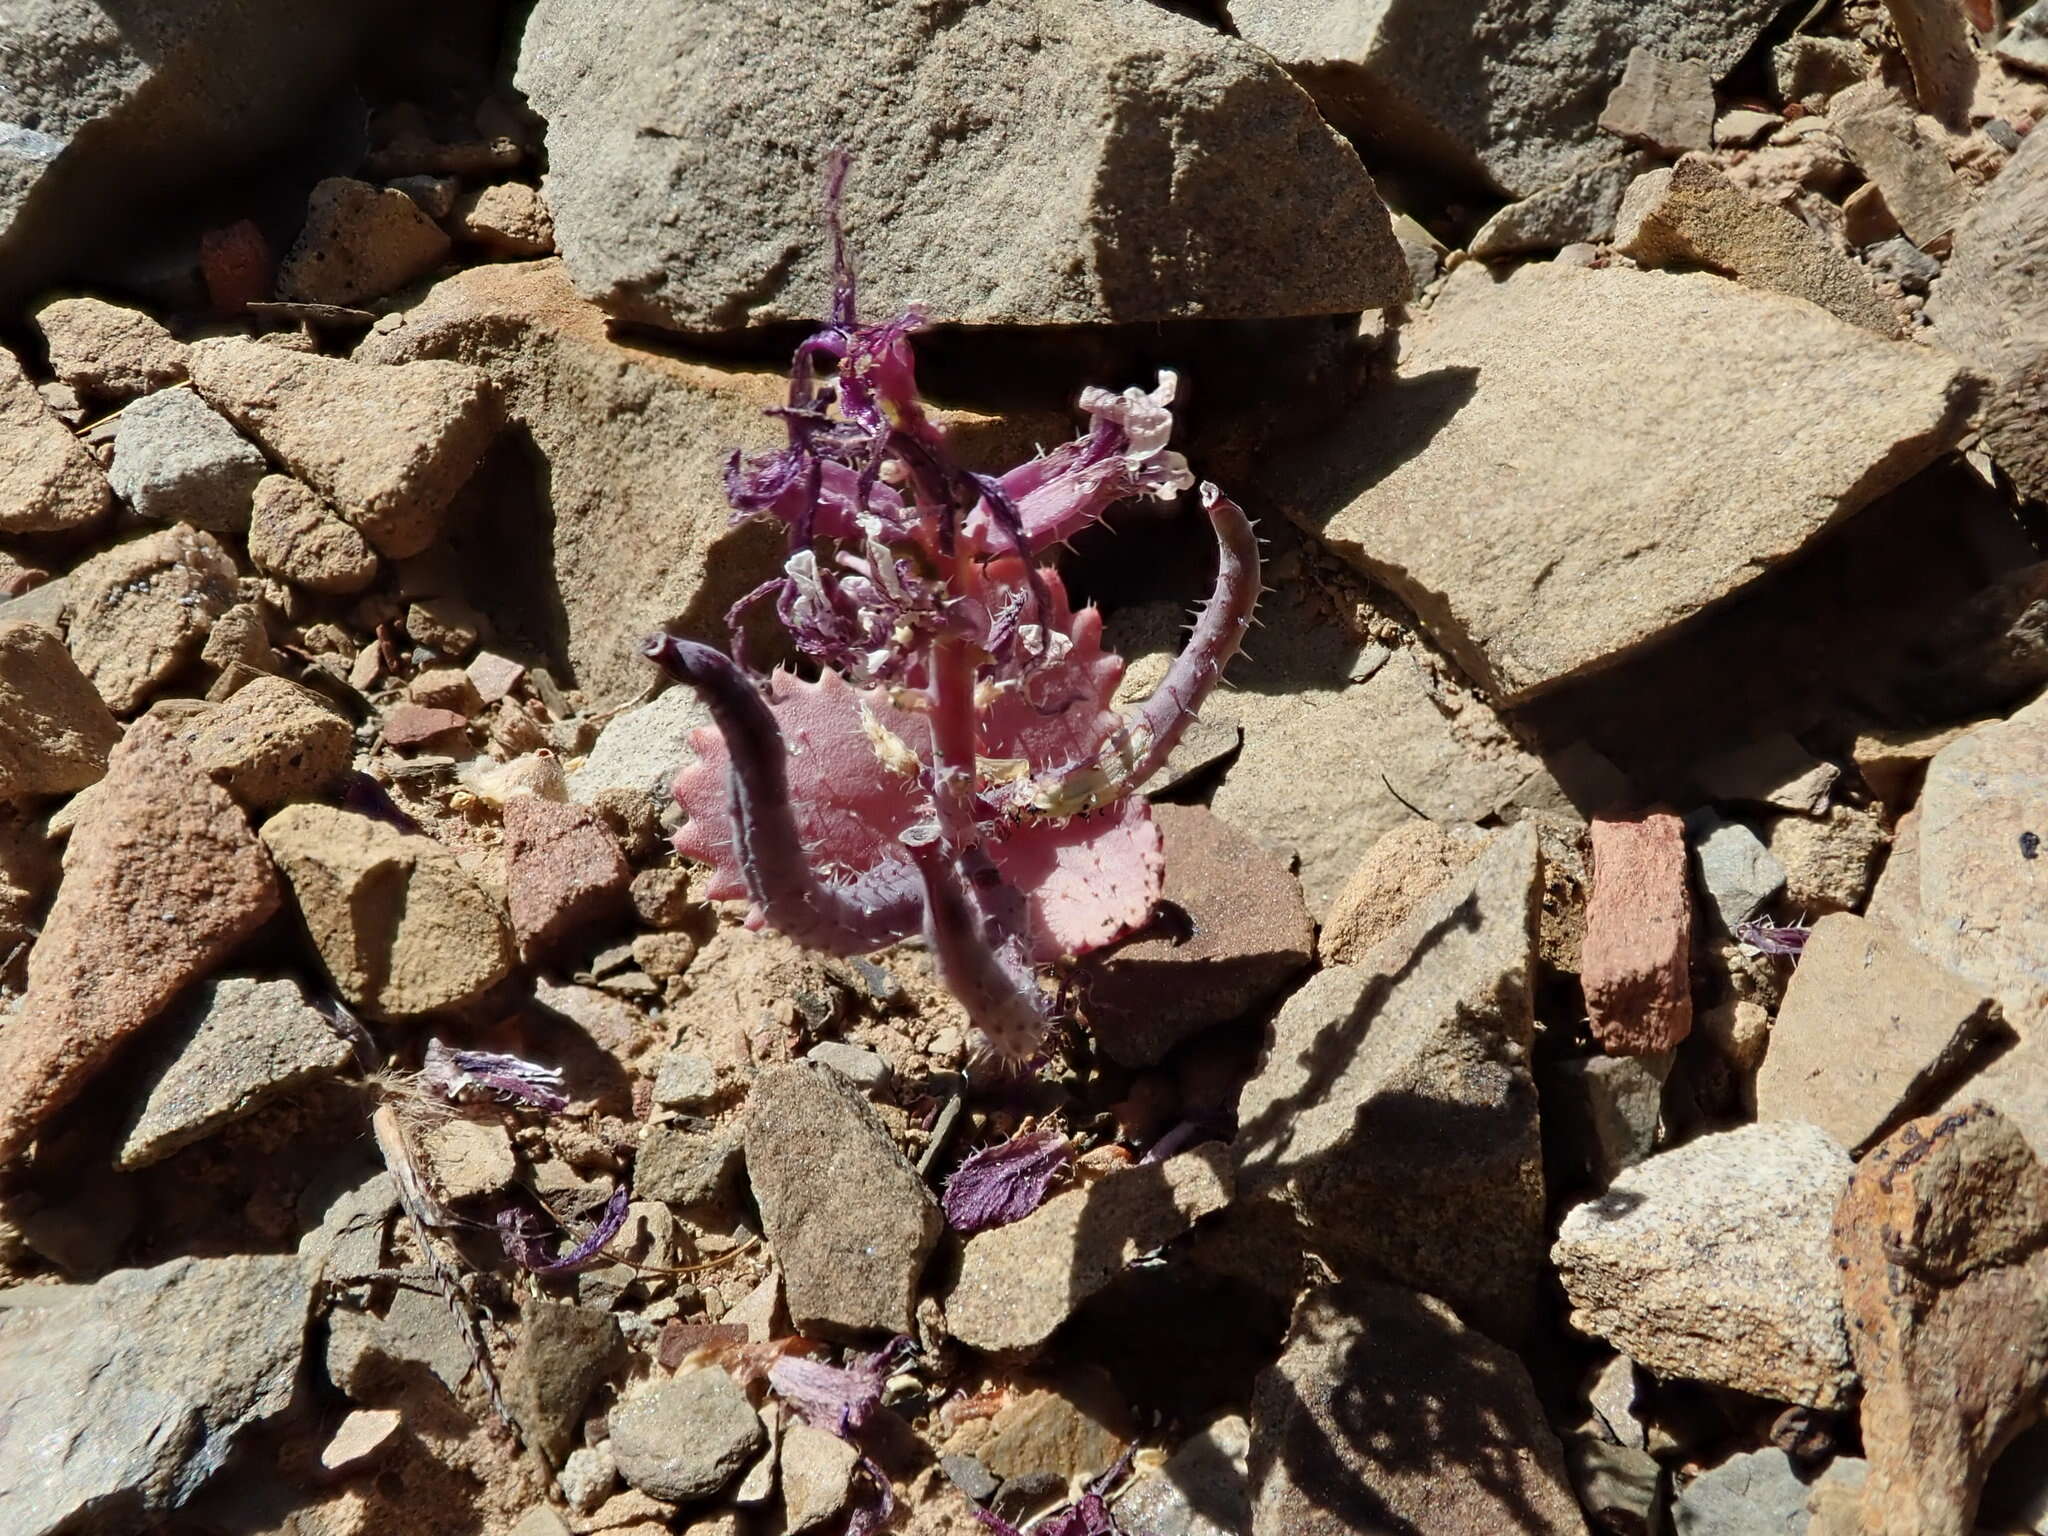 Image of Mt. Hamilton jewelflower